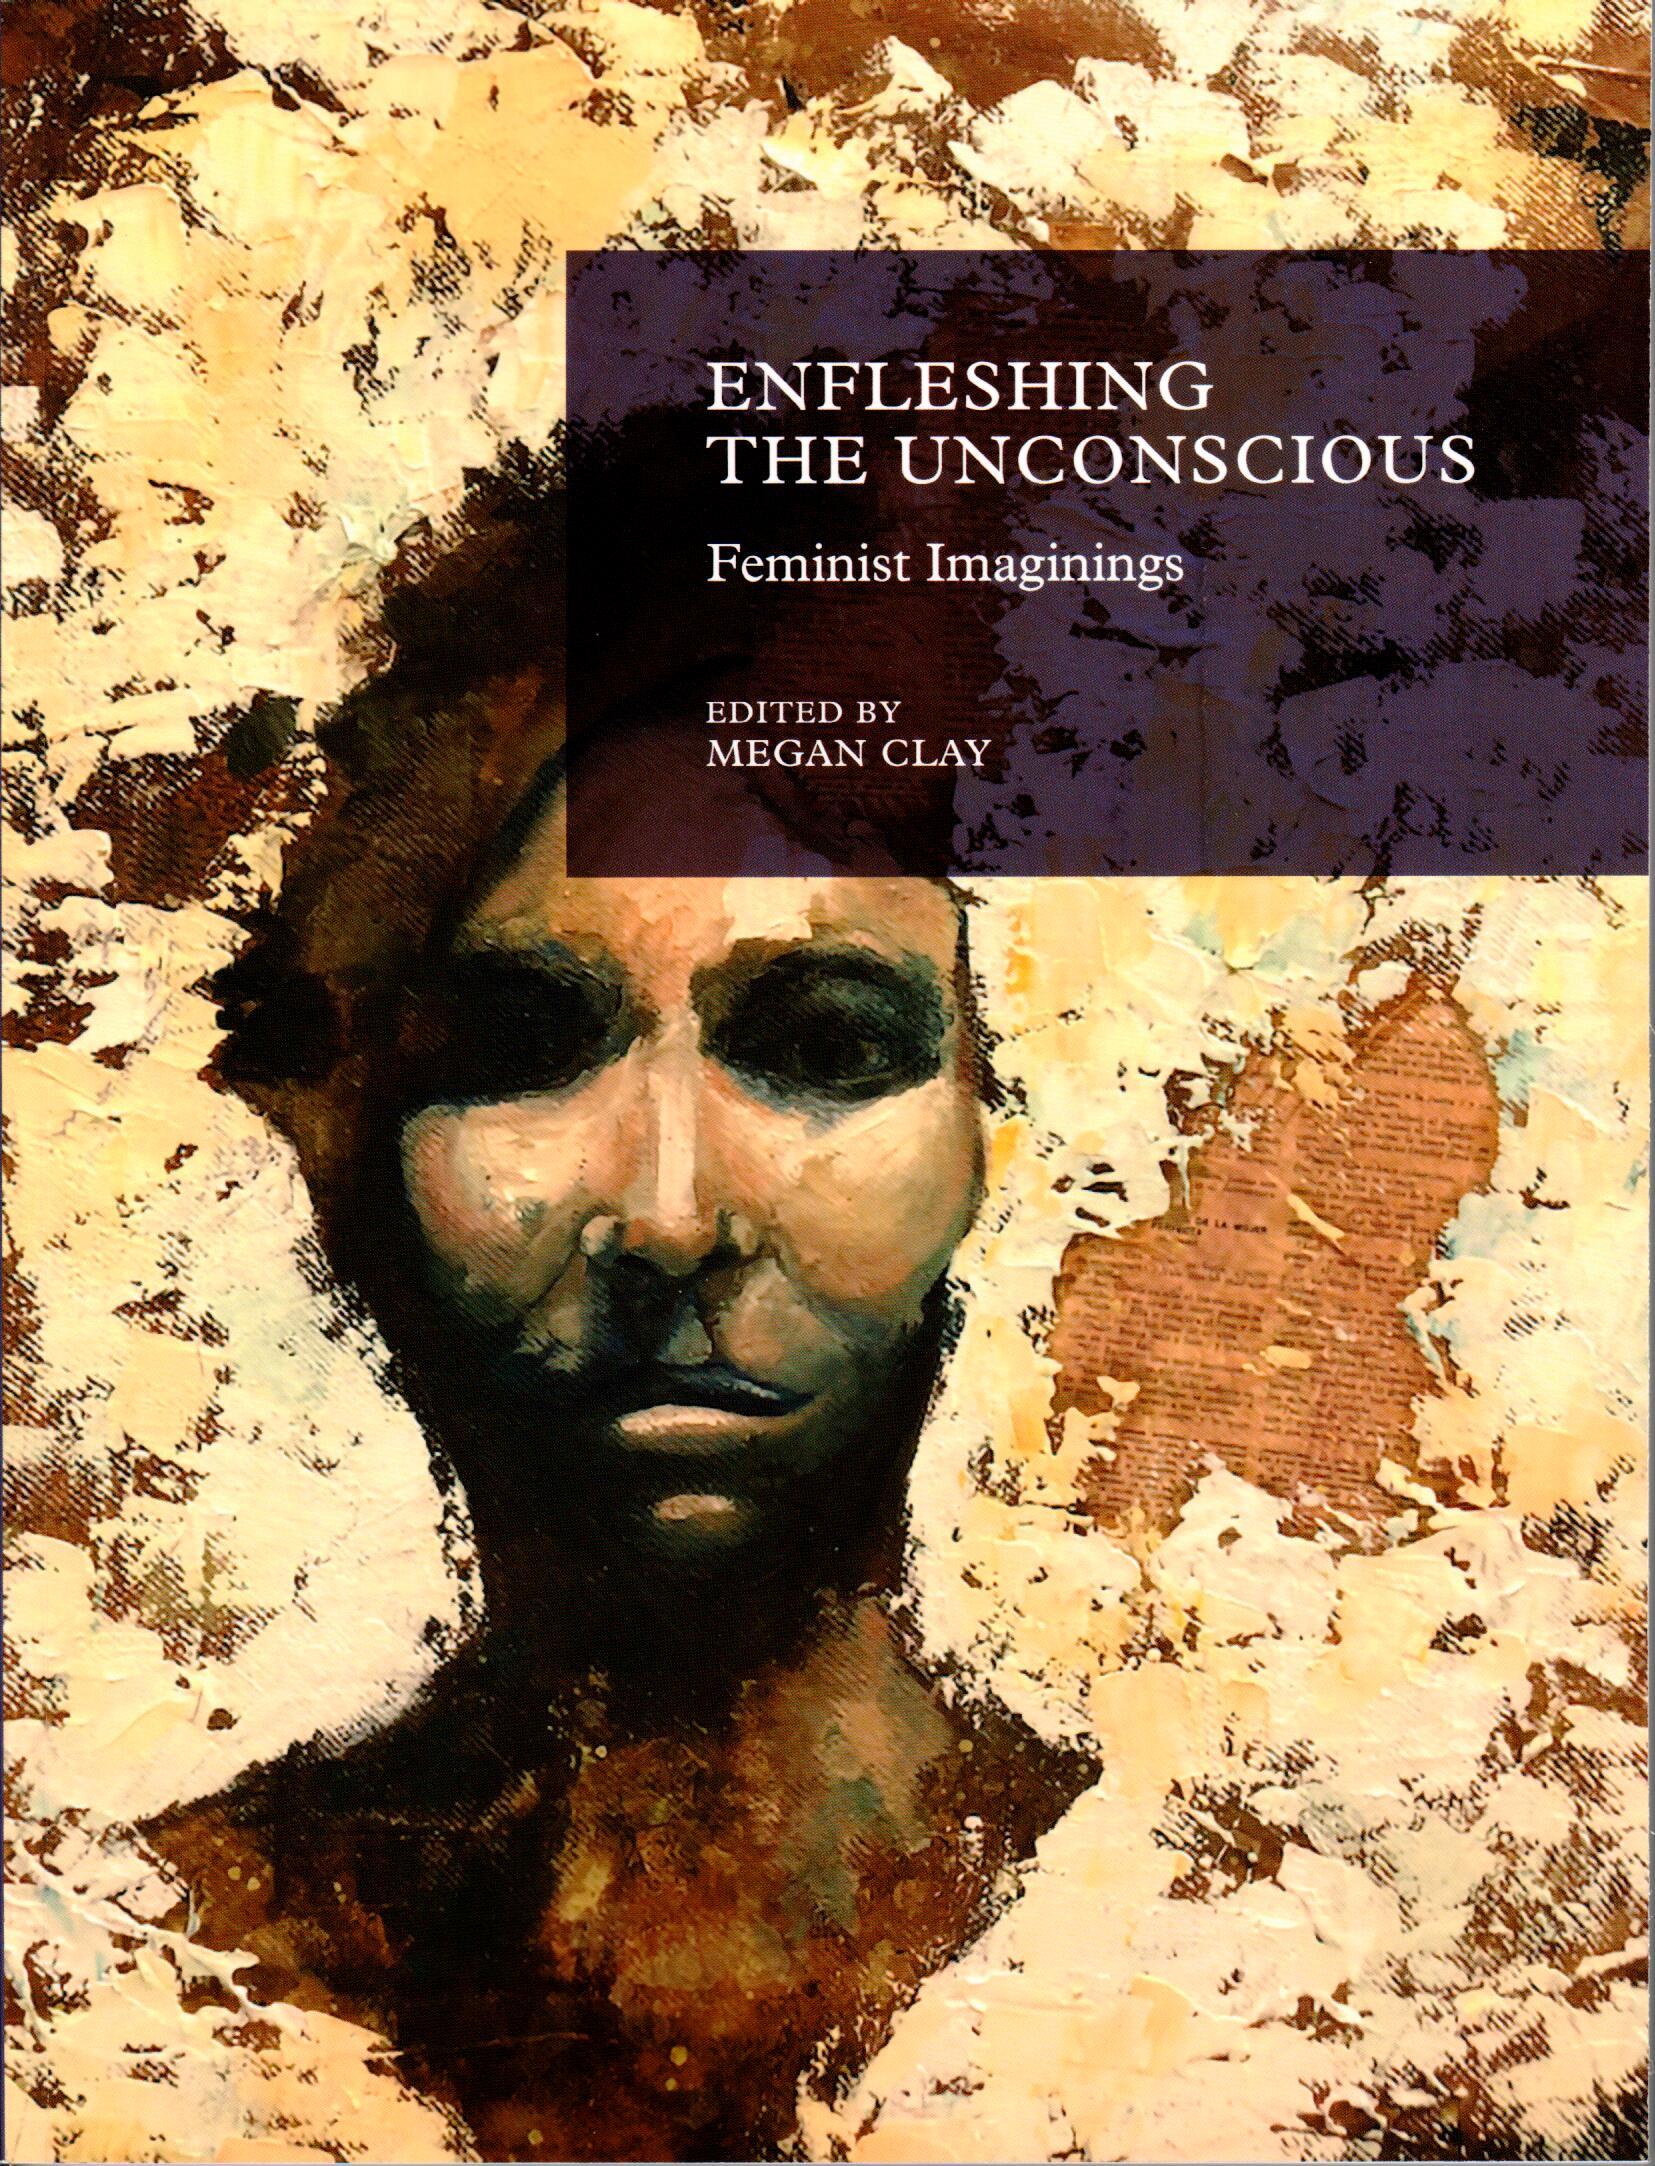 Imagen de portada del libro Enfleshing the unconscious